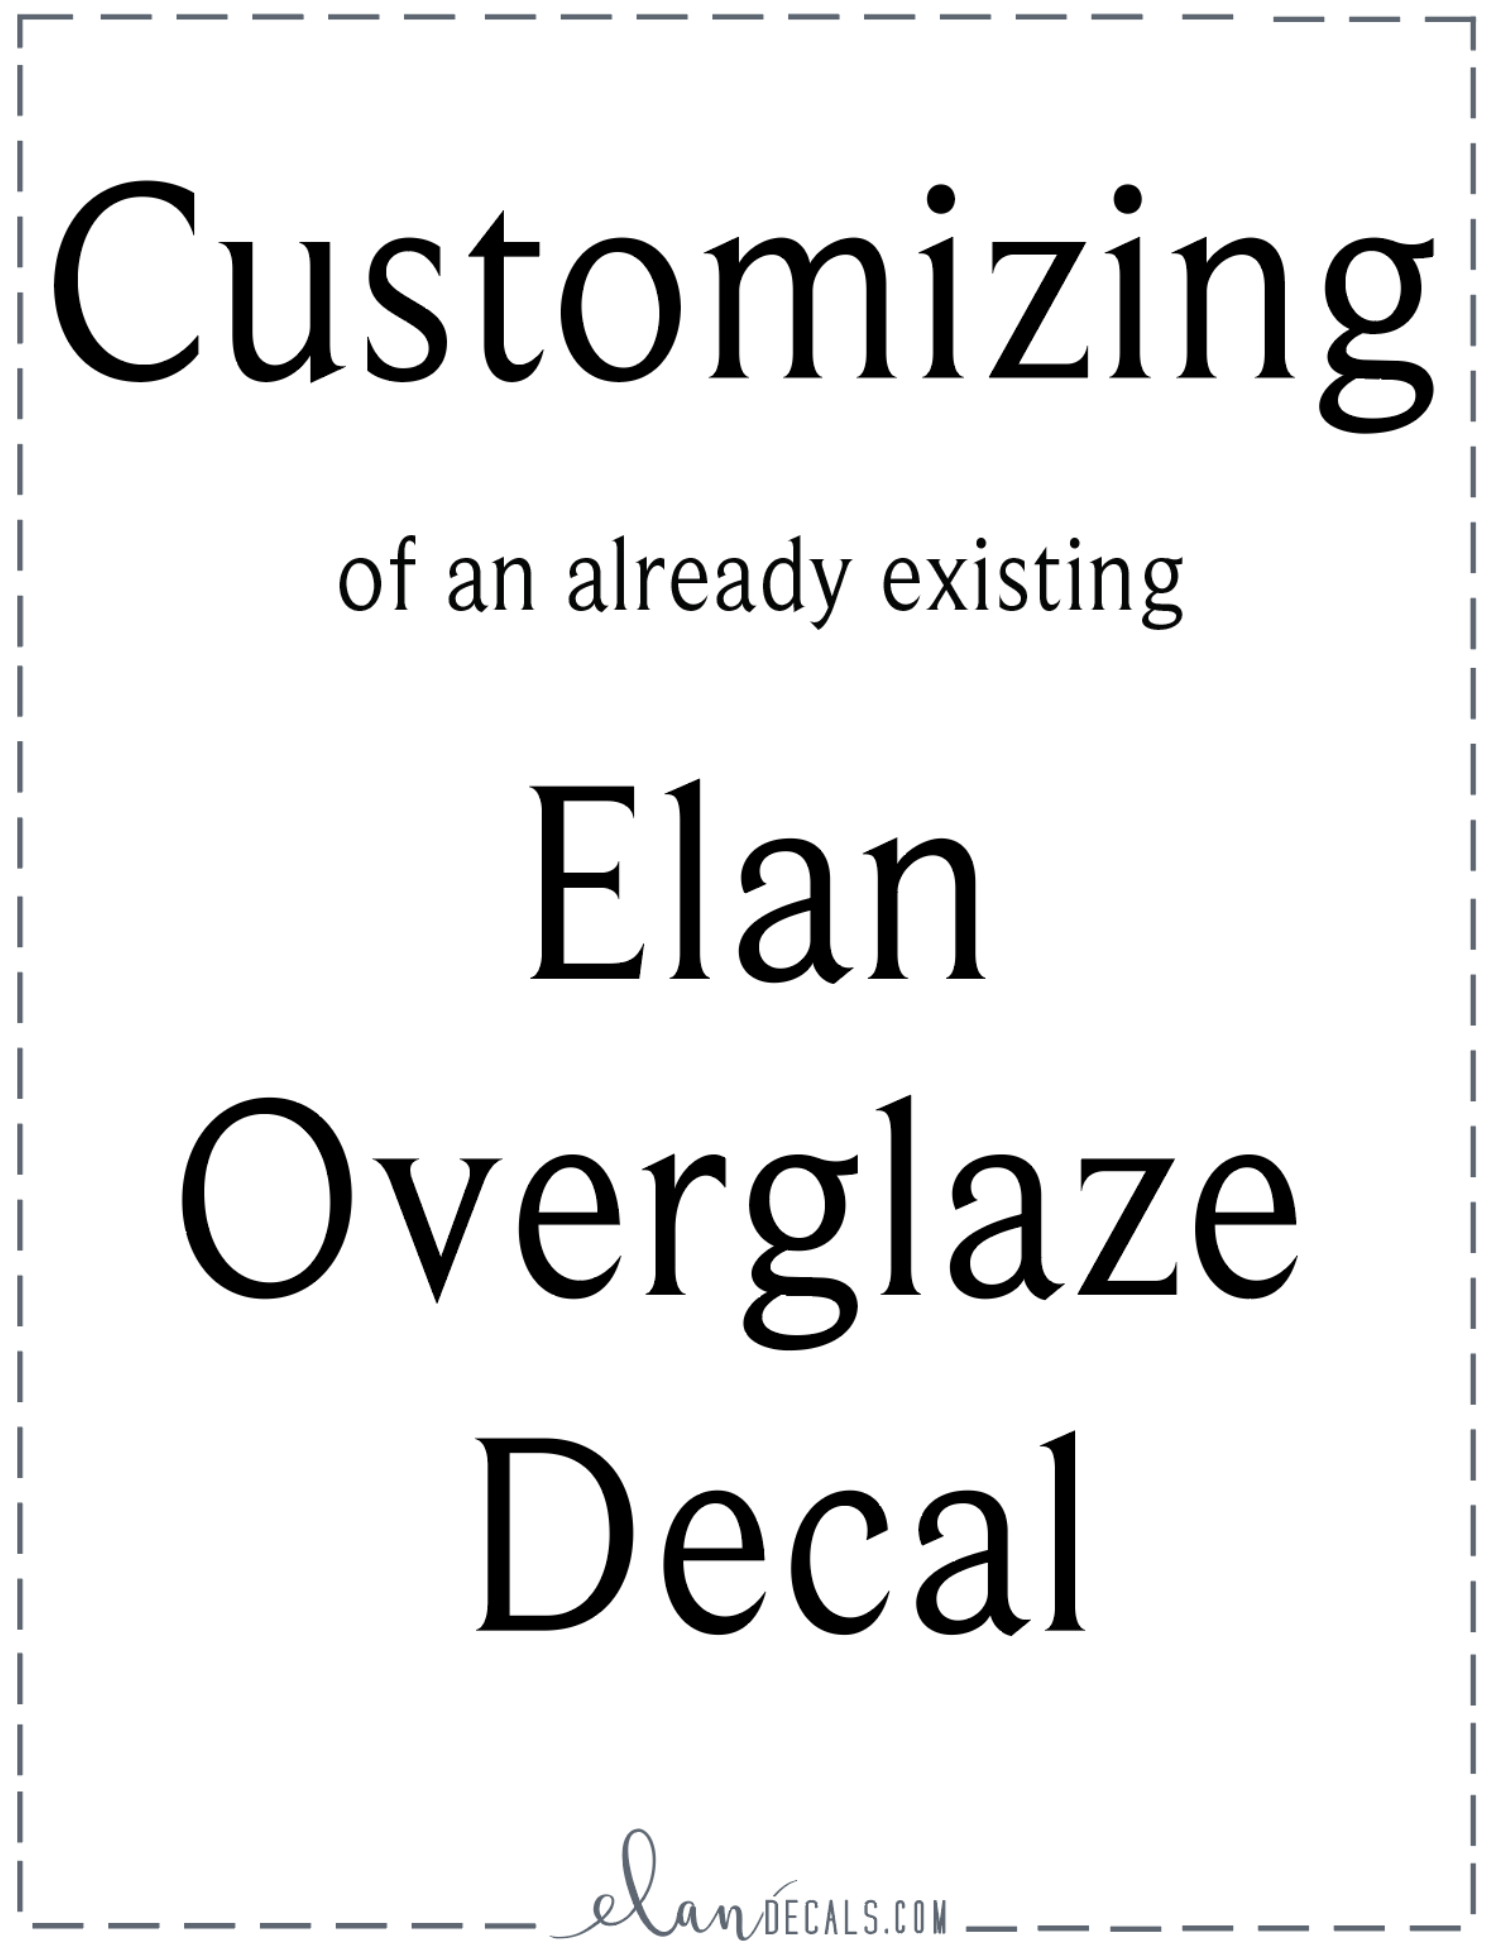 Customized Overglaze Sheet